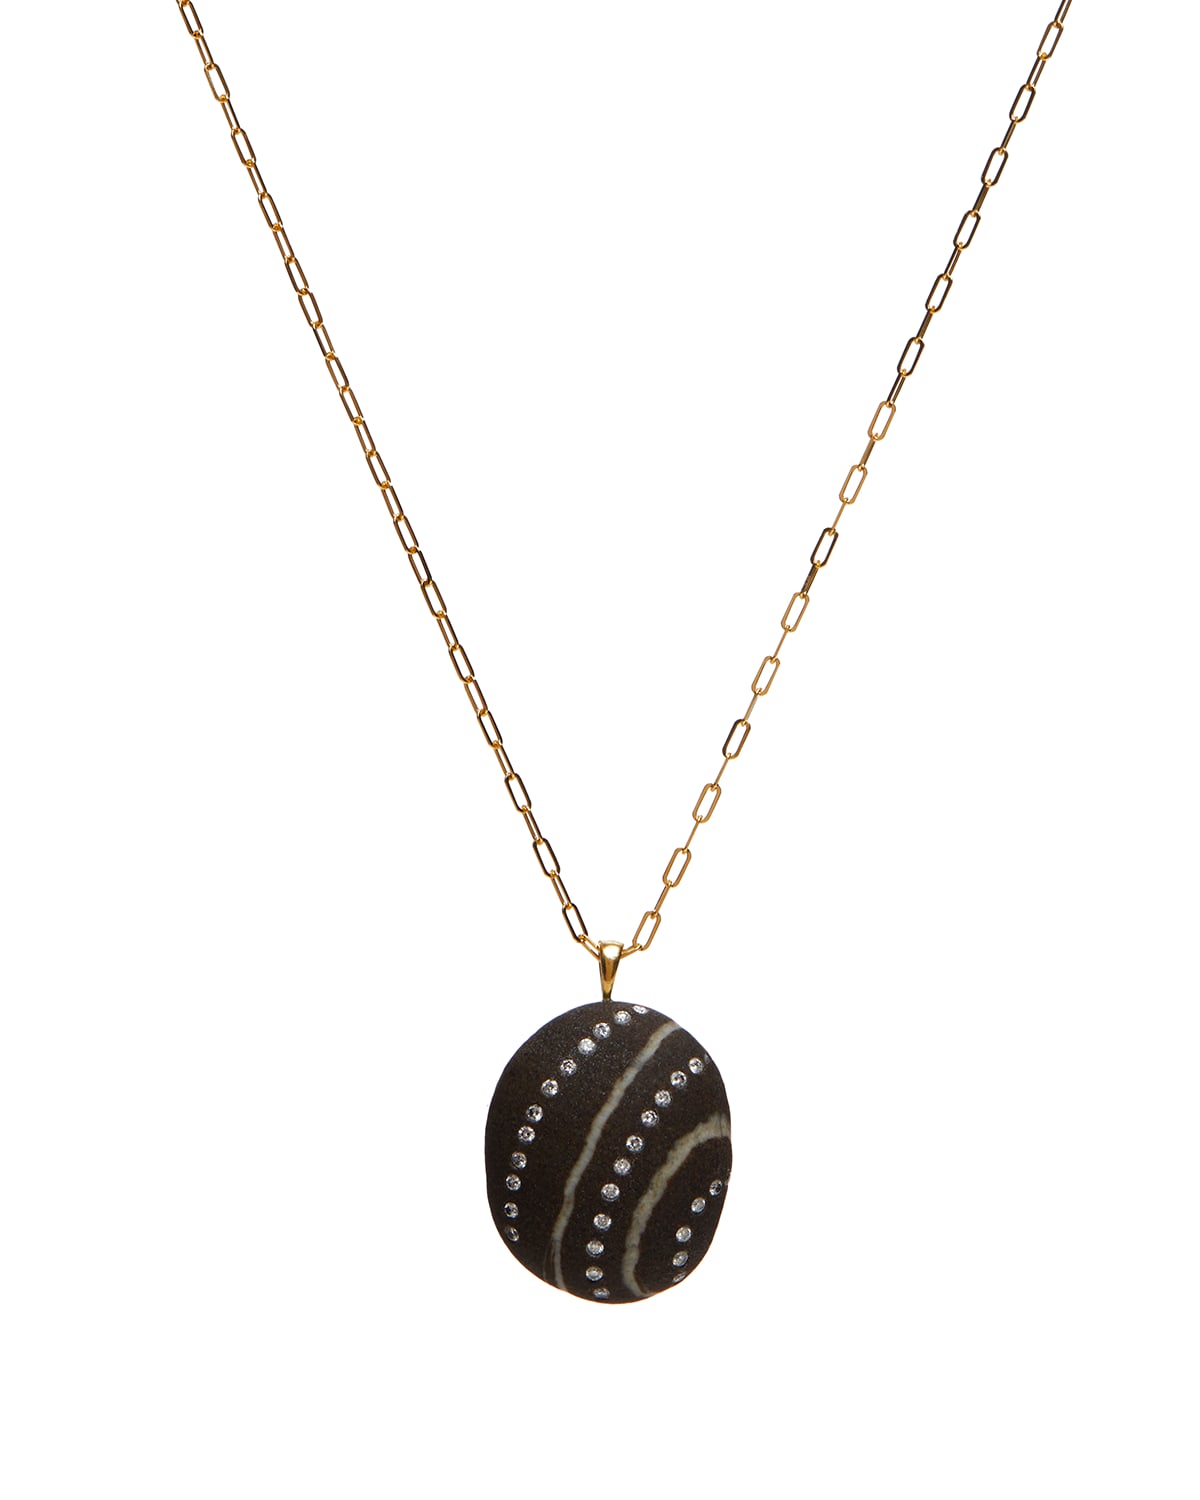 CVC Stones 18k Gold Round Flowy Necklace - One of a Kind, 30"